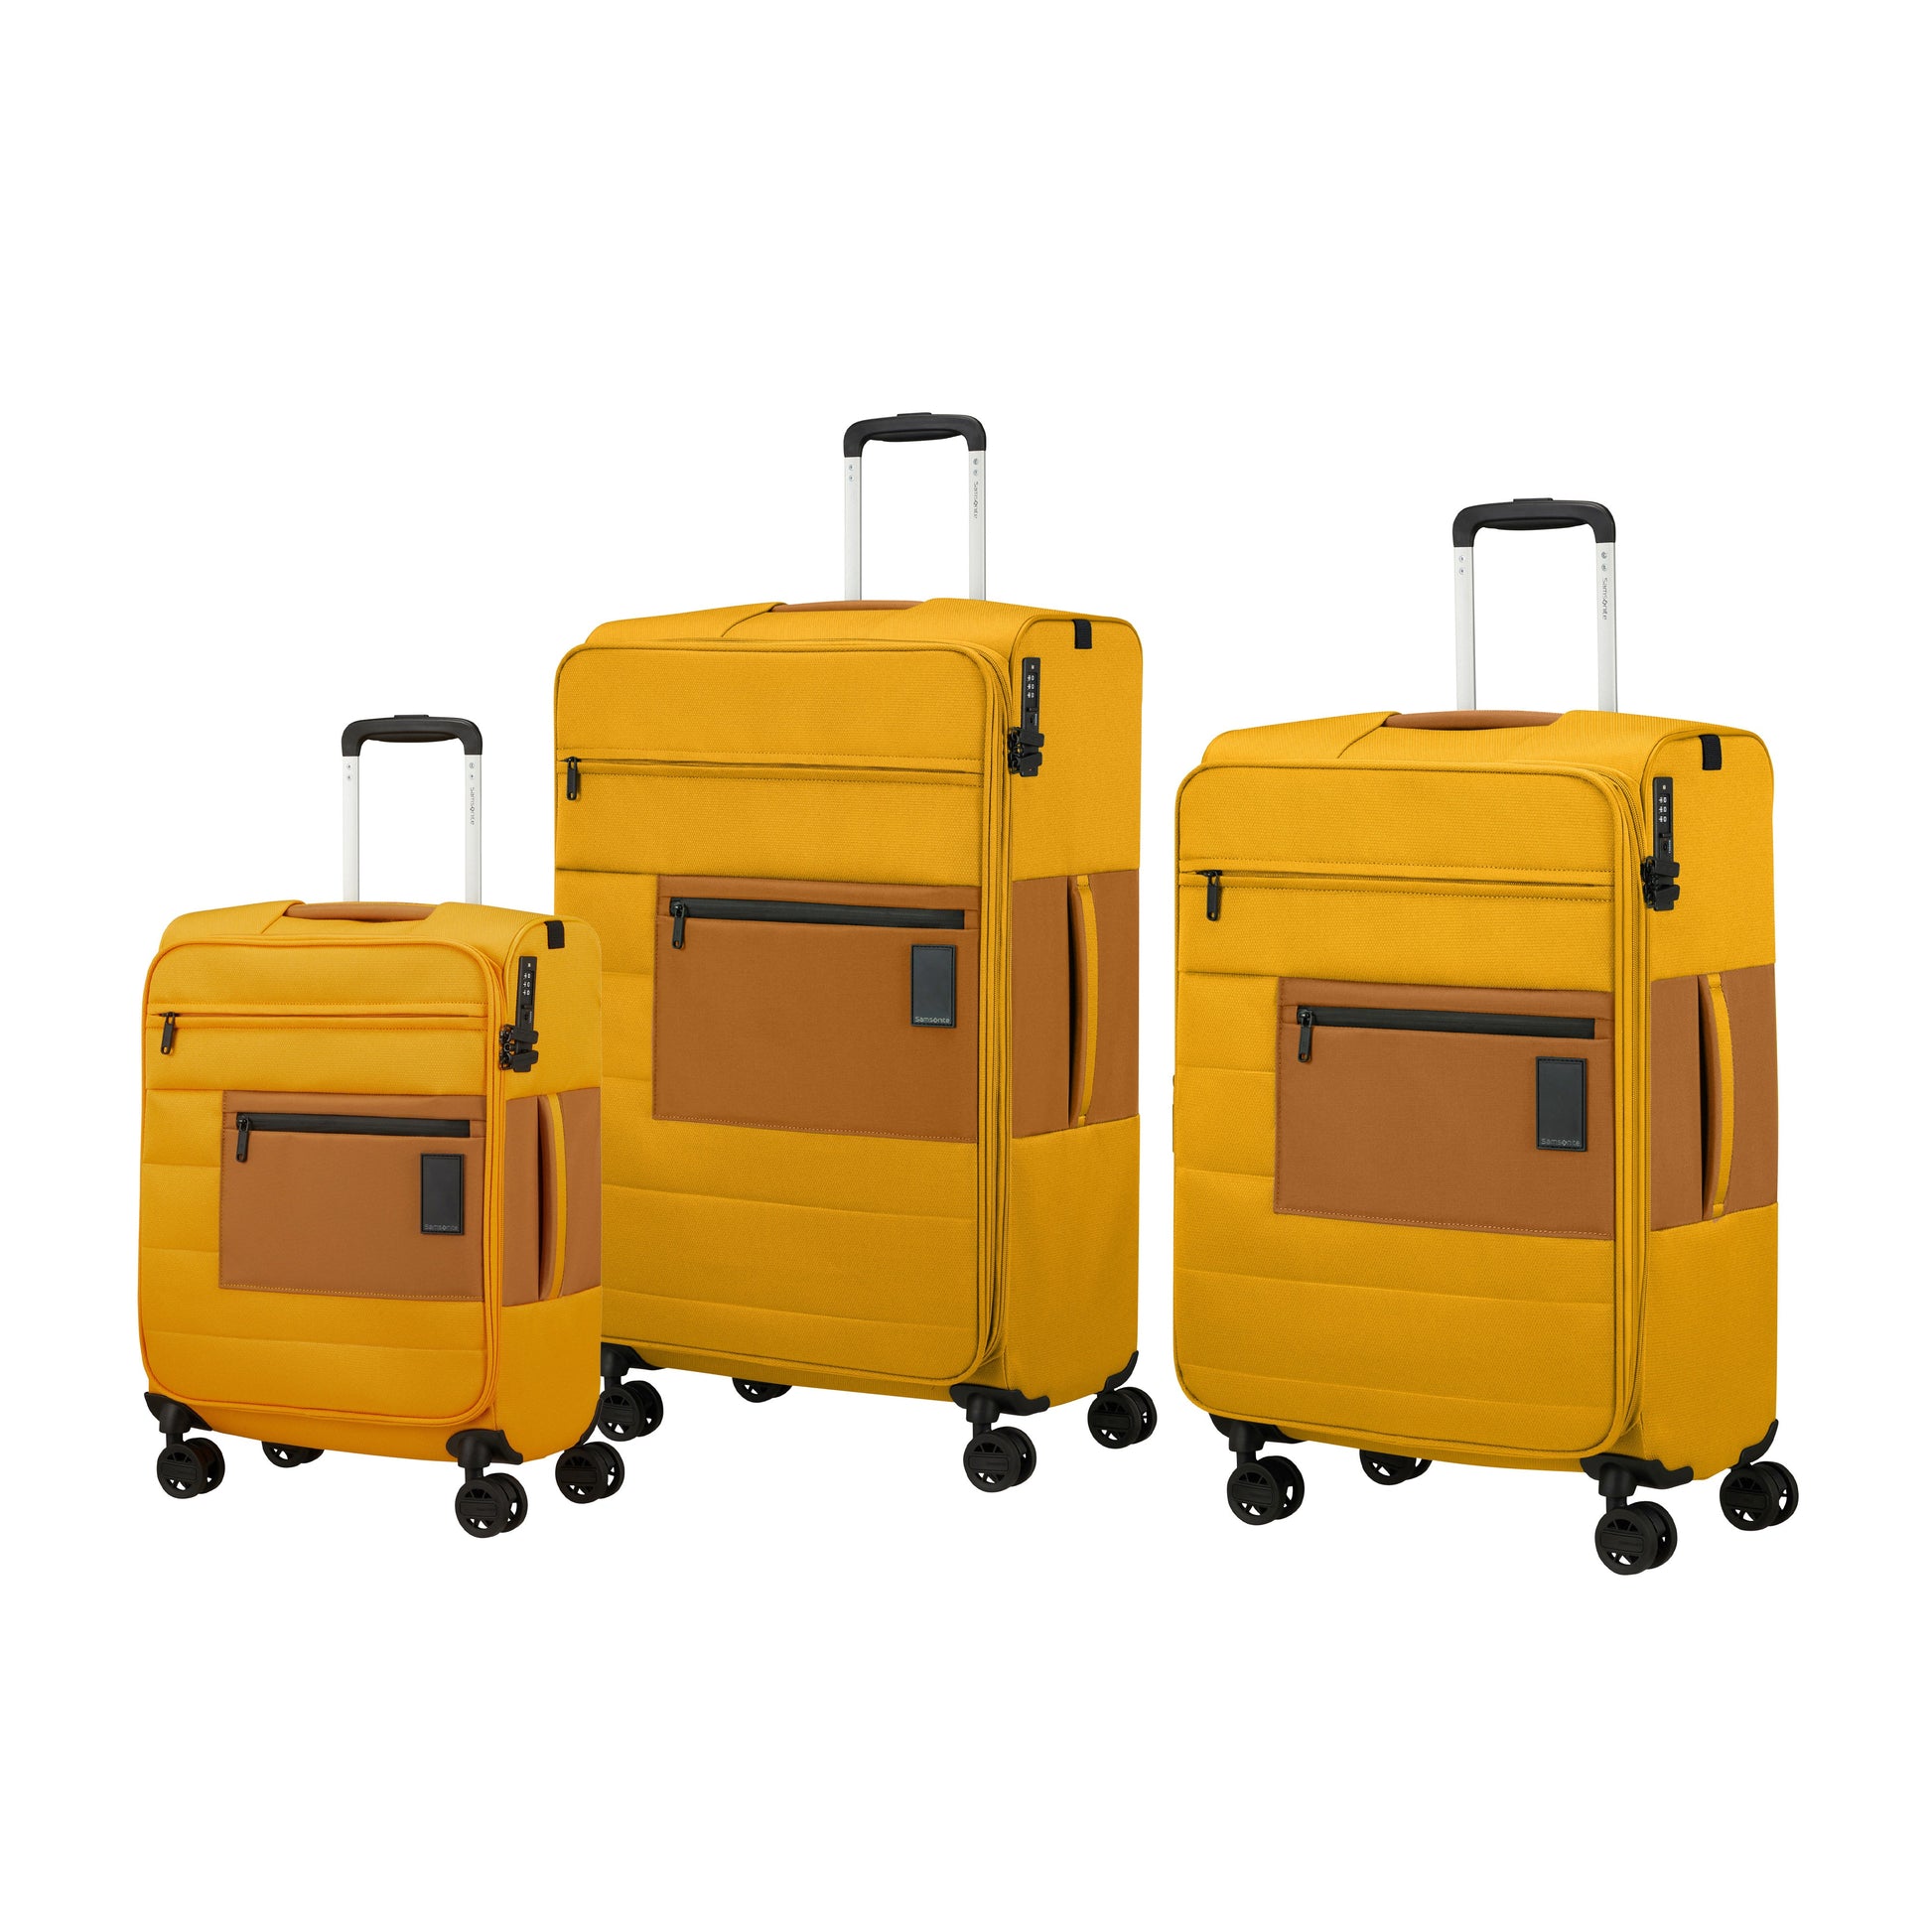 Samsonite Vacay 3-Piece Spinner Luggage Set - Golden Yellow